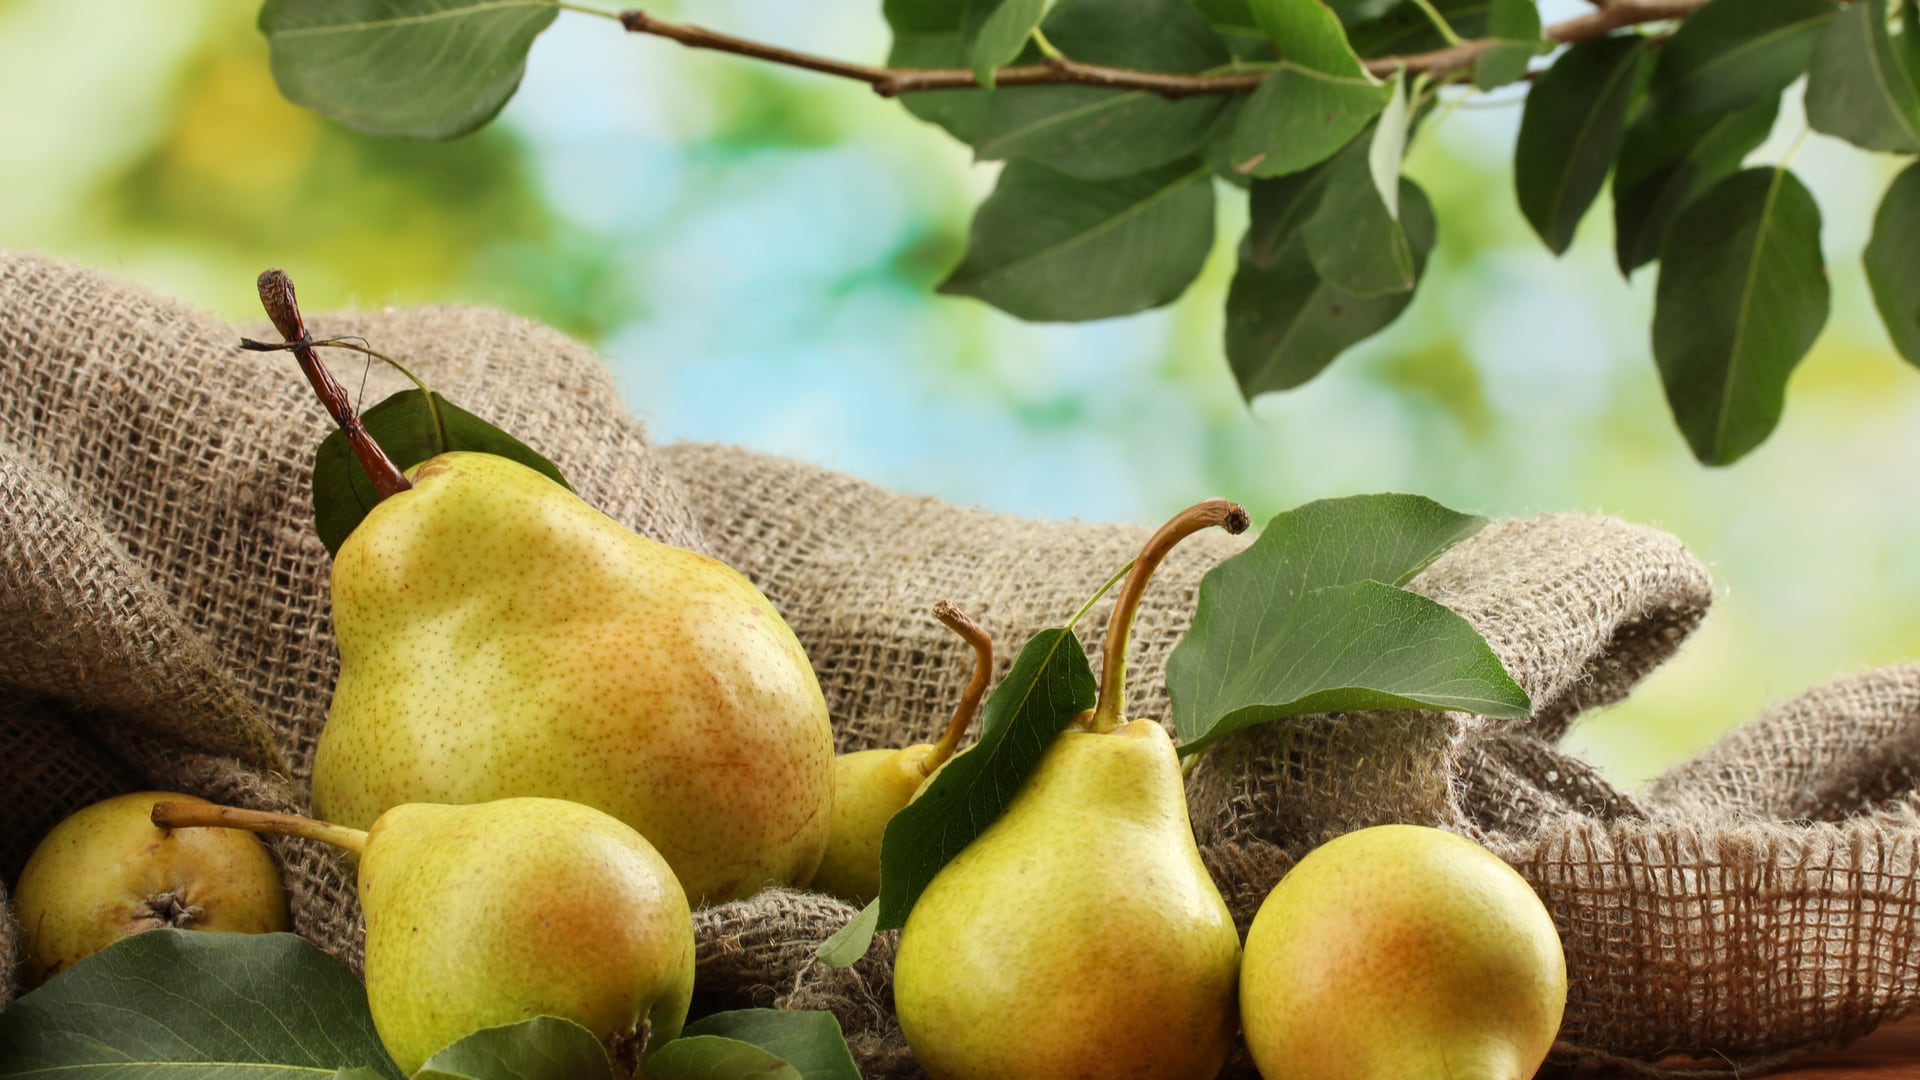 balanced passionate parent Beneficii pere: 10 motive pentru care sa consumi aceste fructe